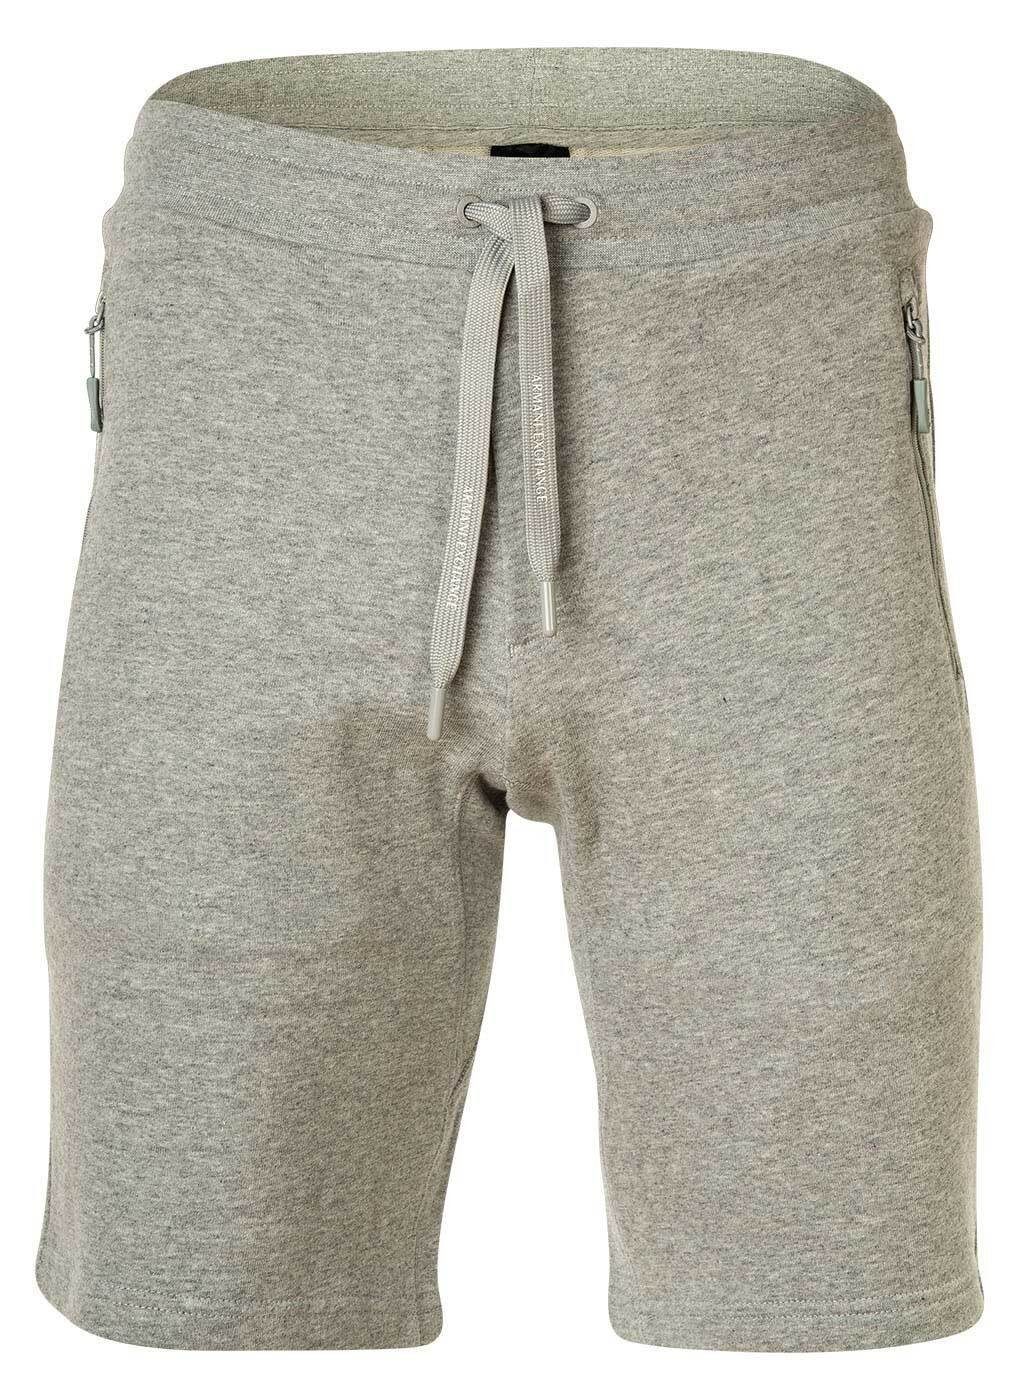 ARMANI EXCHANGE Sweatshorts Herren Loungewear Jogginghose Grau kurz Pants, 